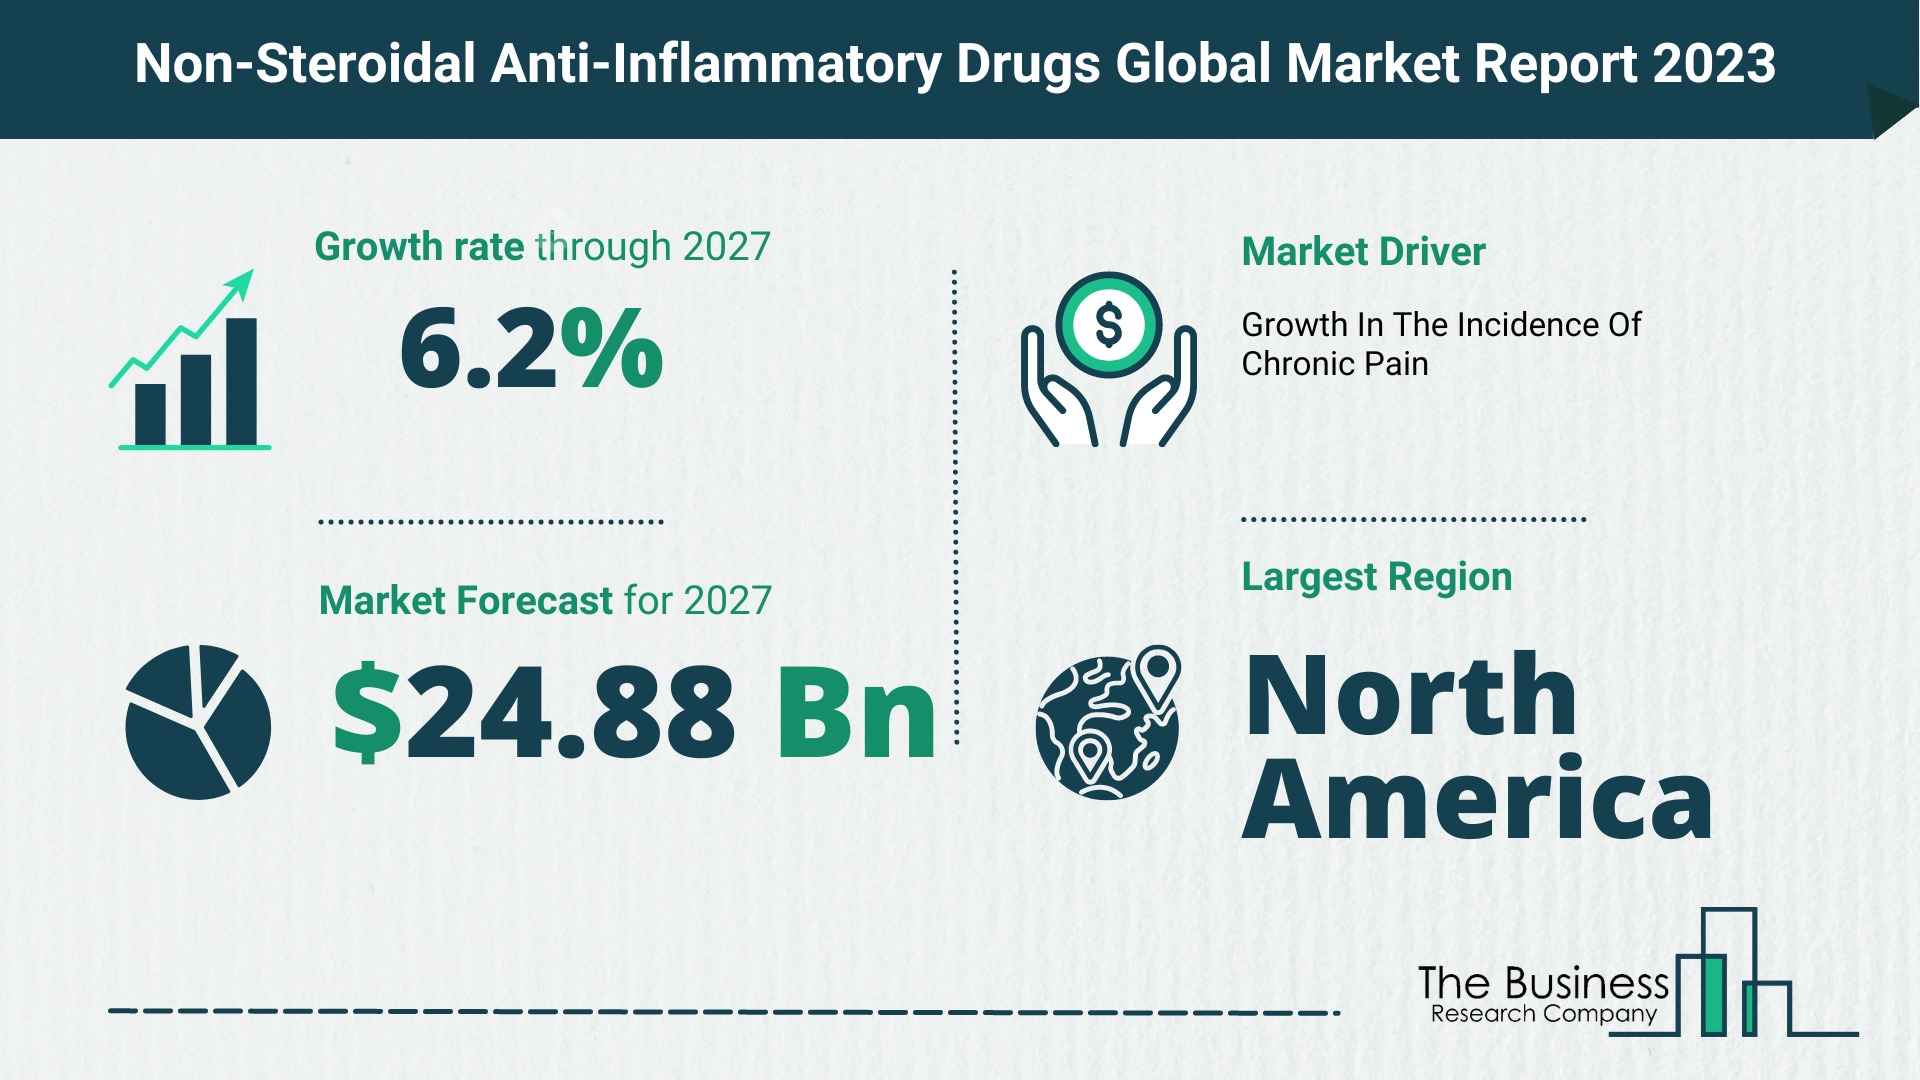 Global Non-Steroidal Anti-Inflammatory Drugs Market